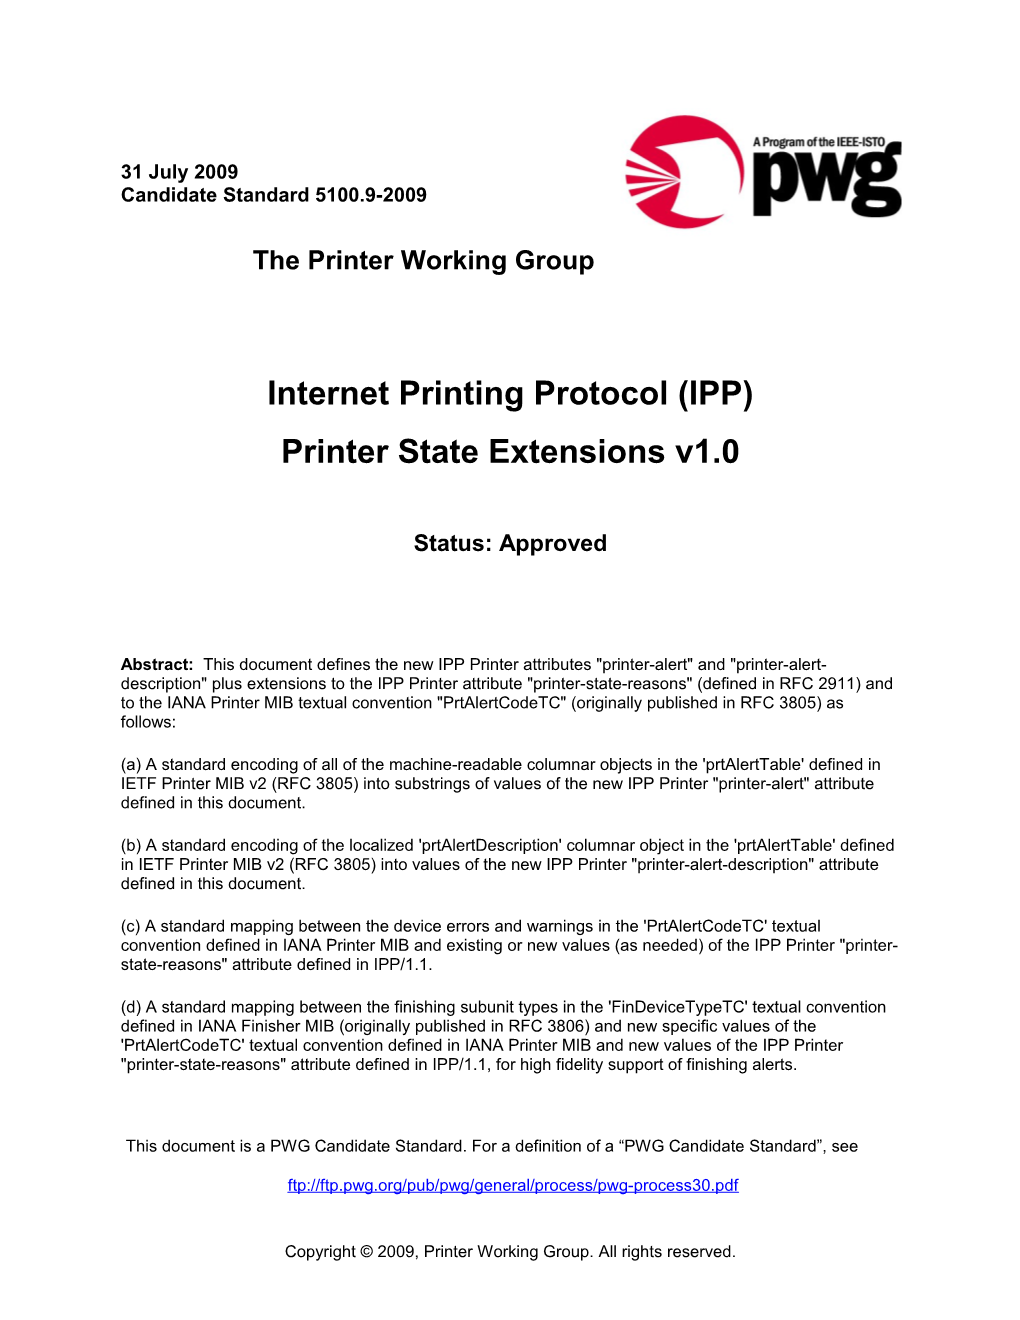 Internet Printing Protocol (IPP)/Printer State Extensions V1.0